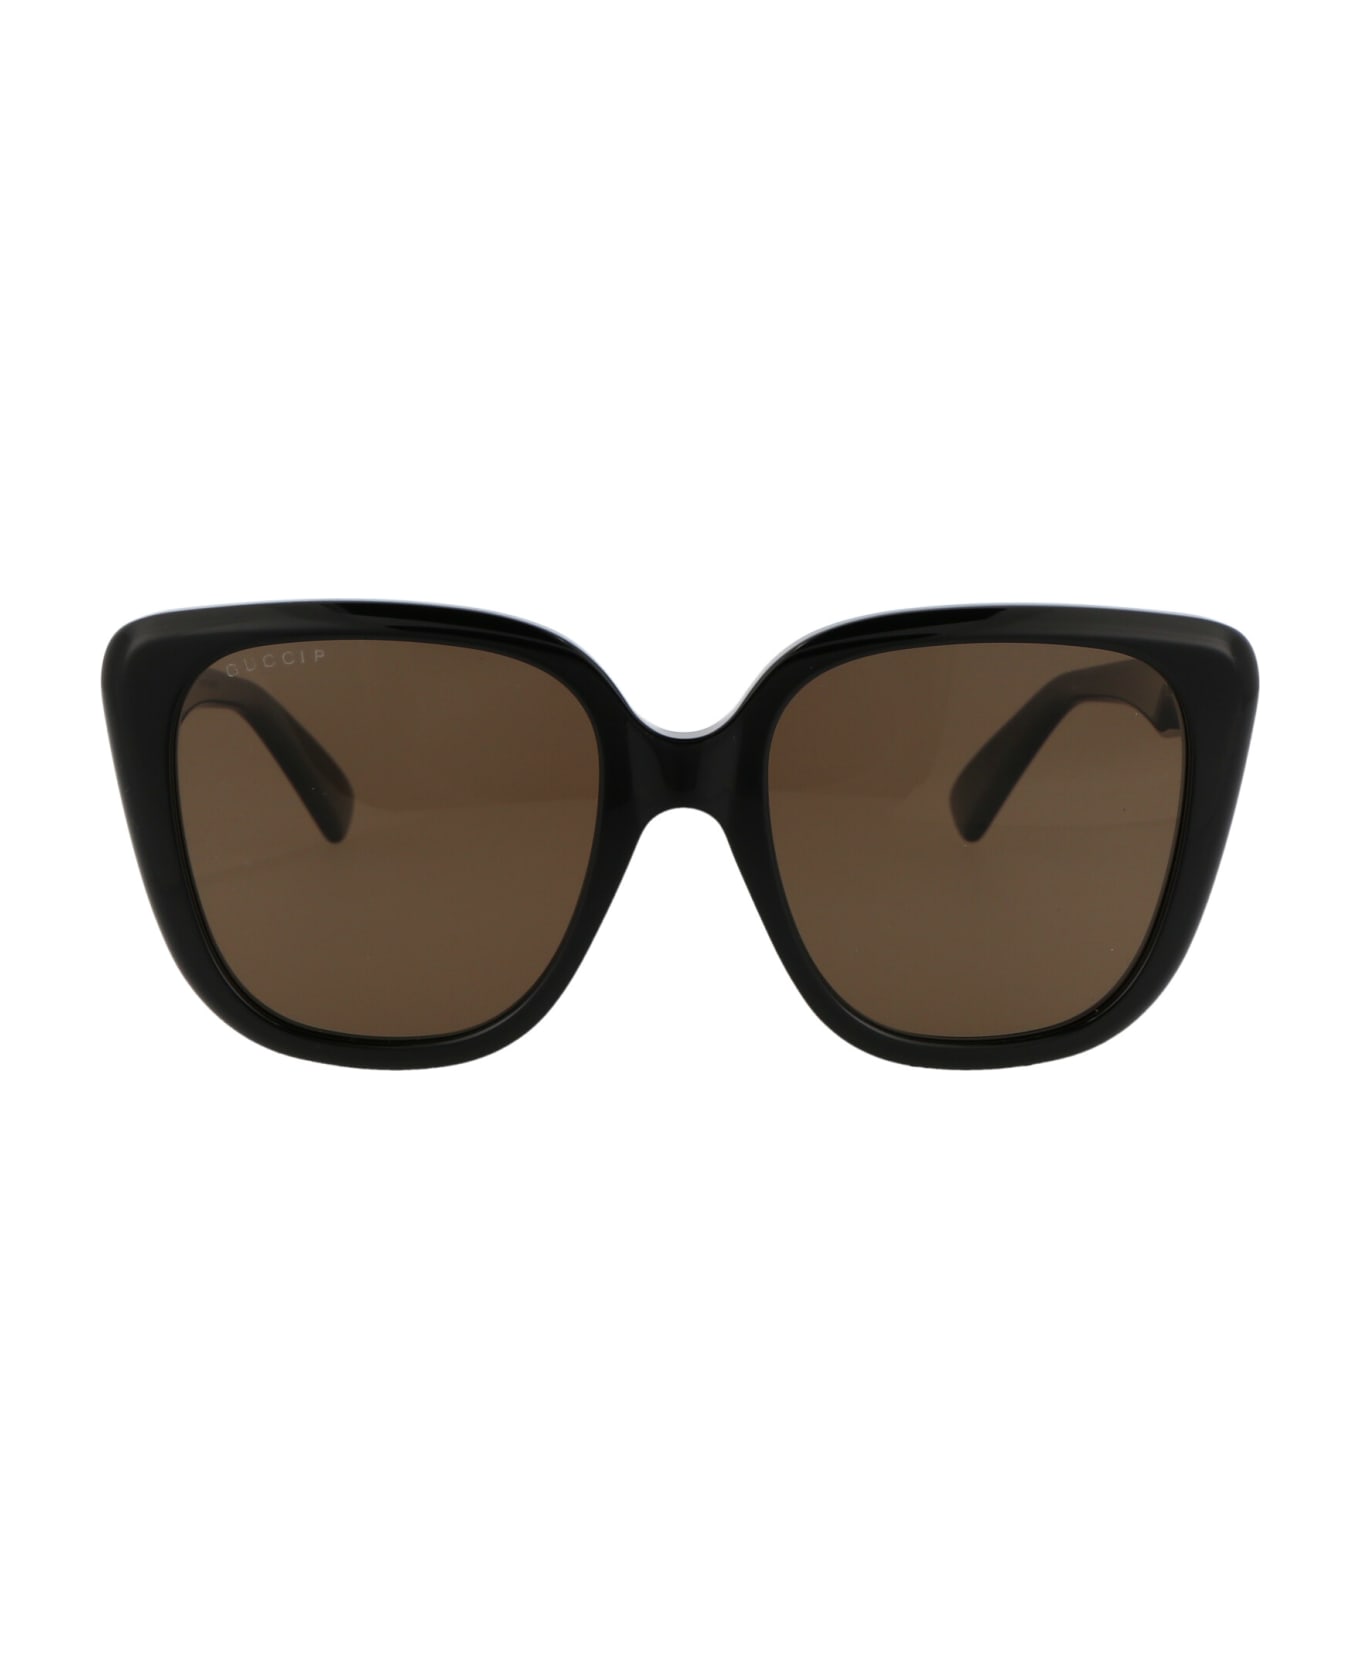 Gucci Eyewear Gg1169s Sunglasses - 001 BLACK BLACK BROWN